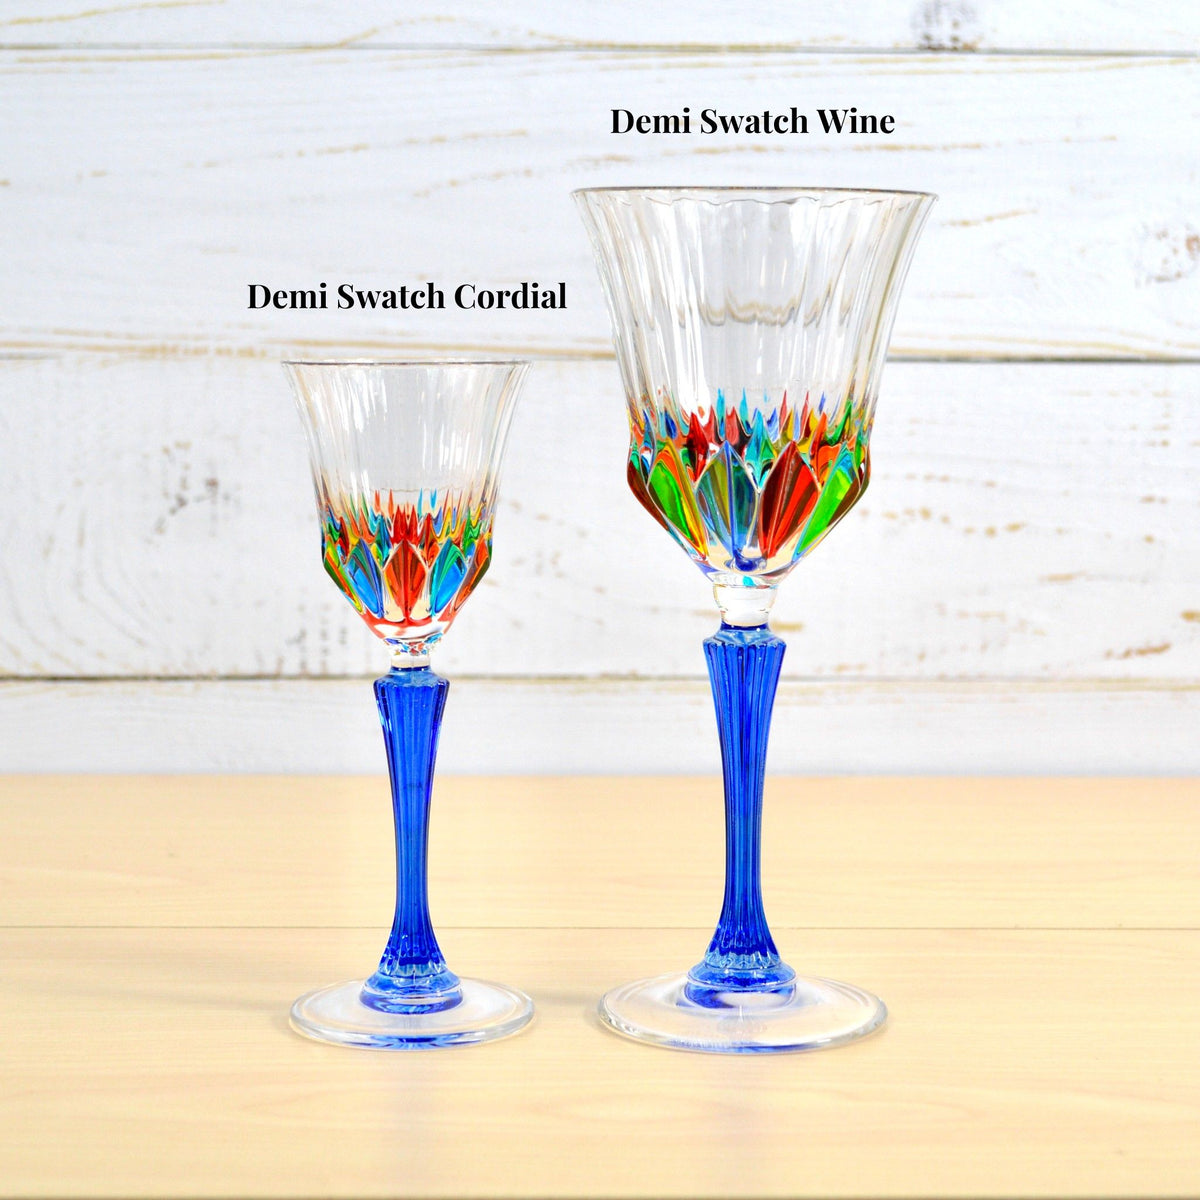 Demi Swatch Cordial Glasses, Hand-Painted Italian Crystal, Set of 6 - My Italian Decor